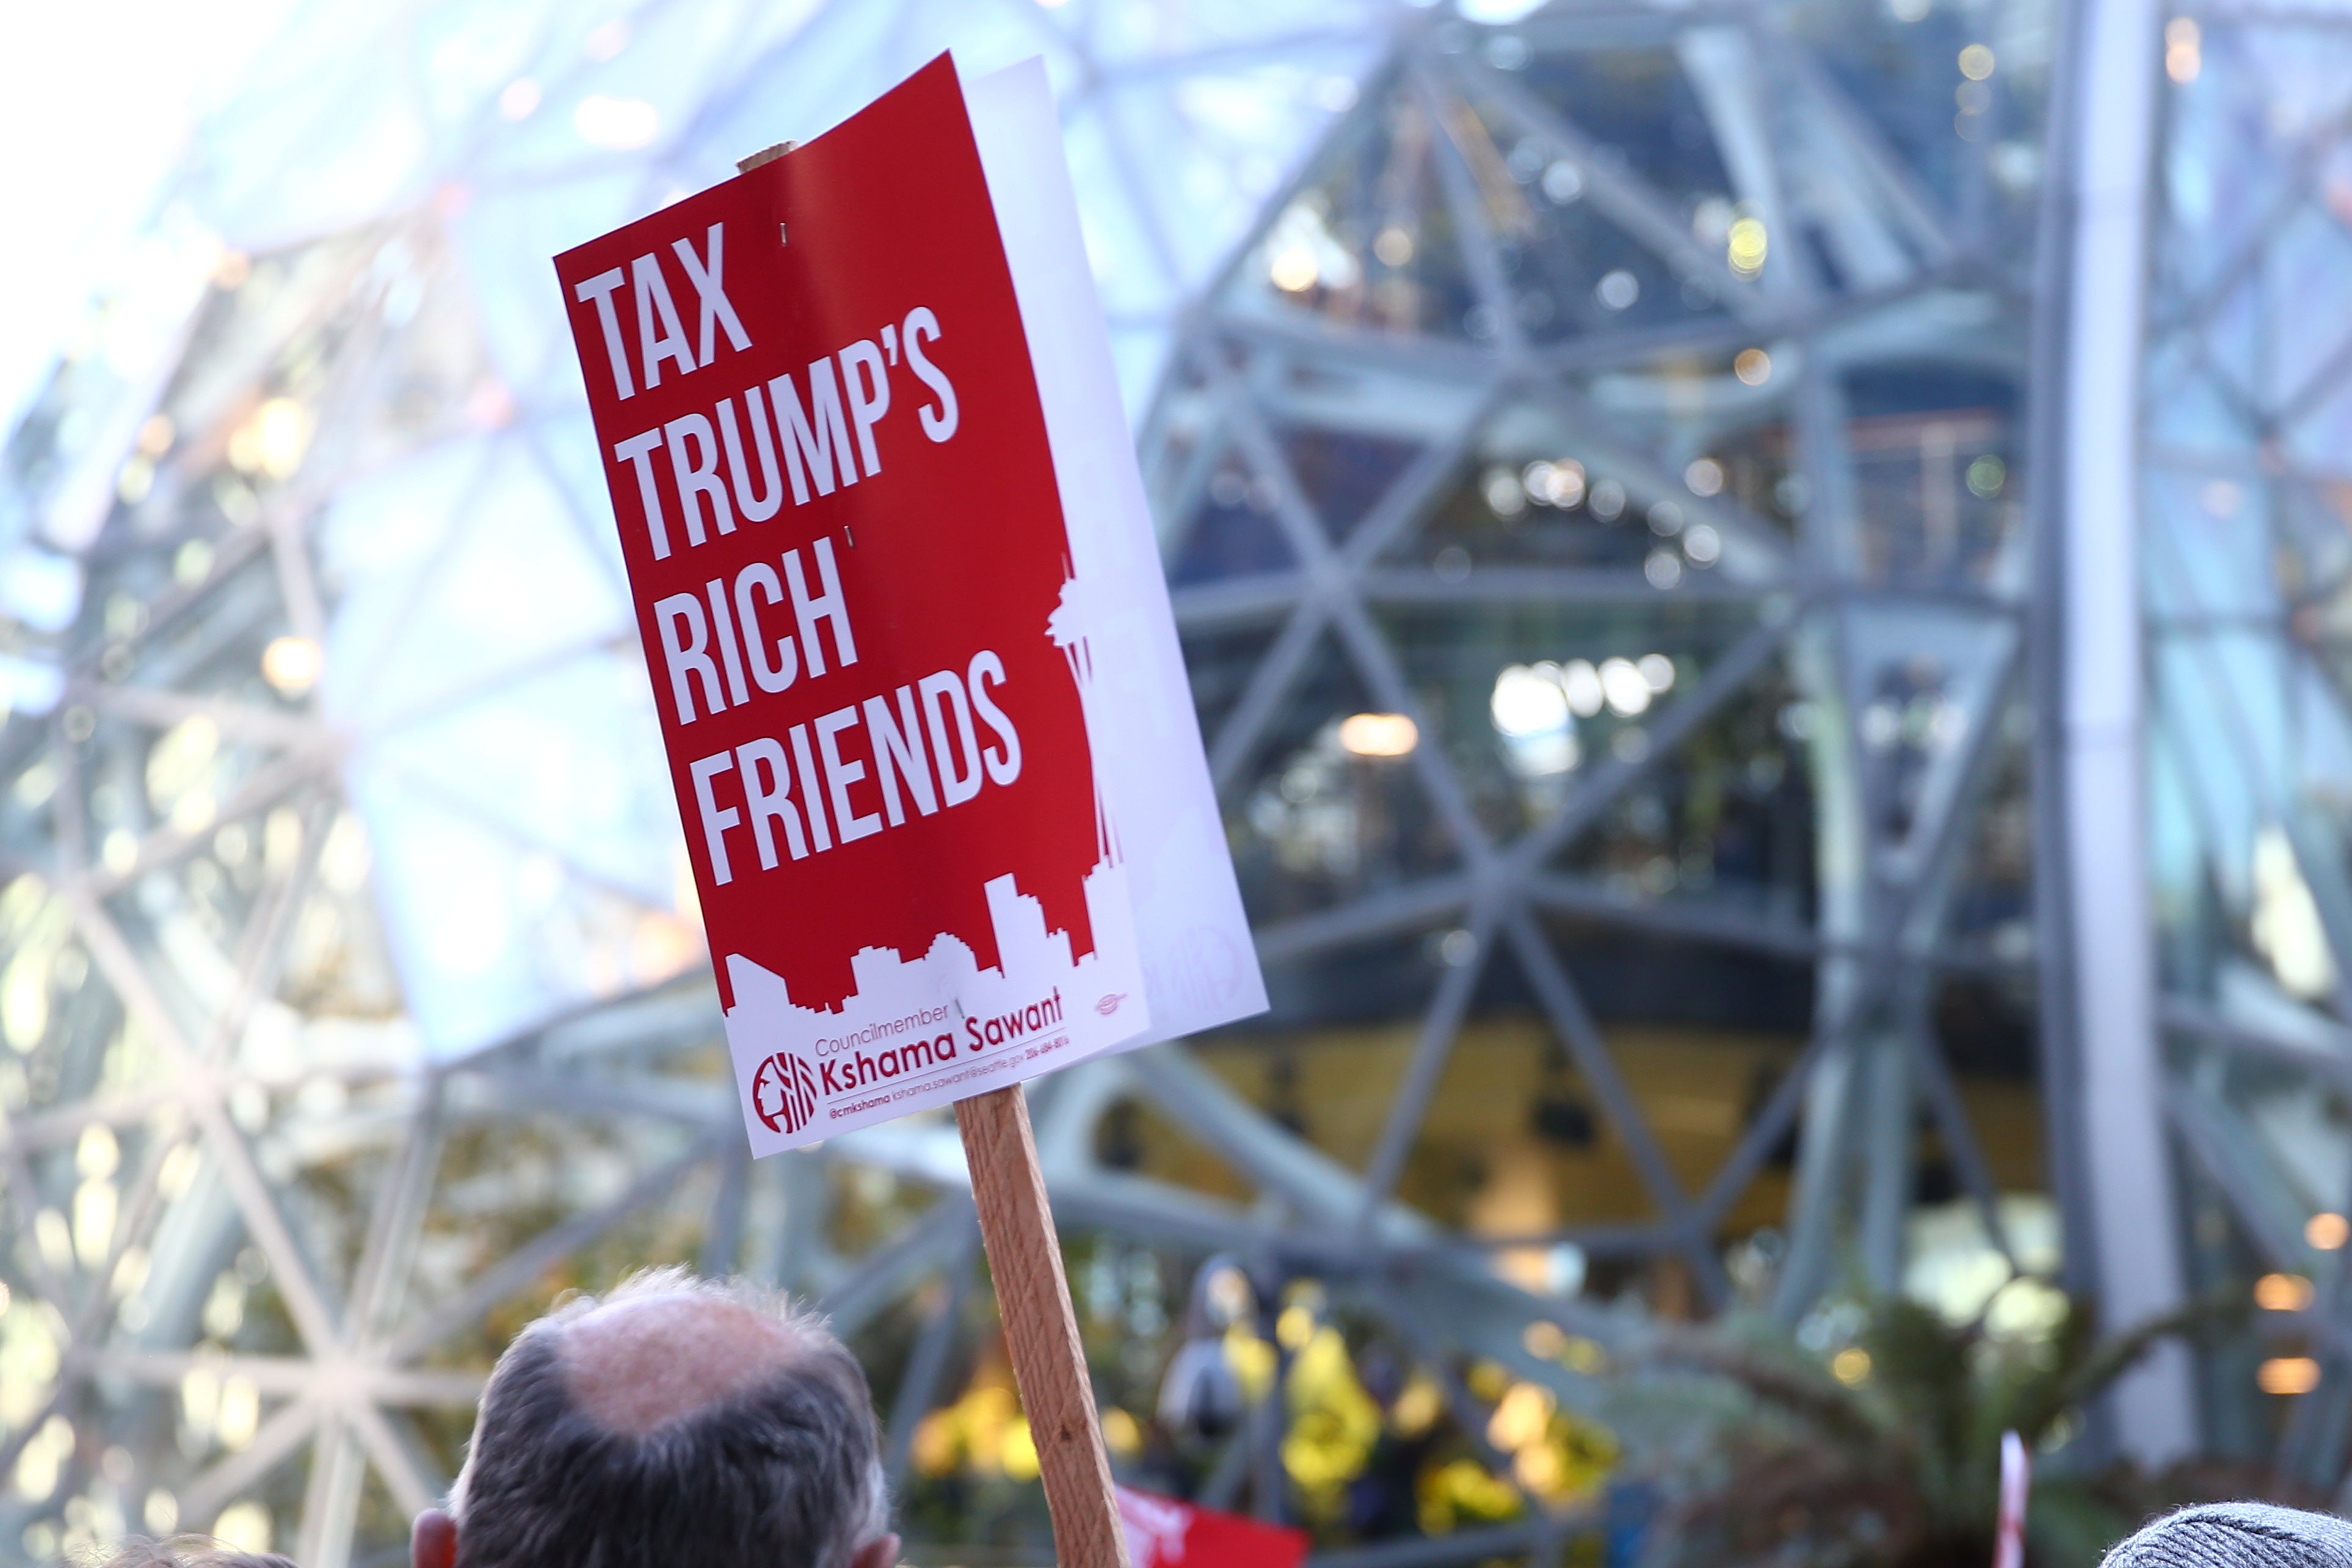 Tax cut protester